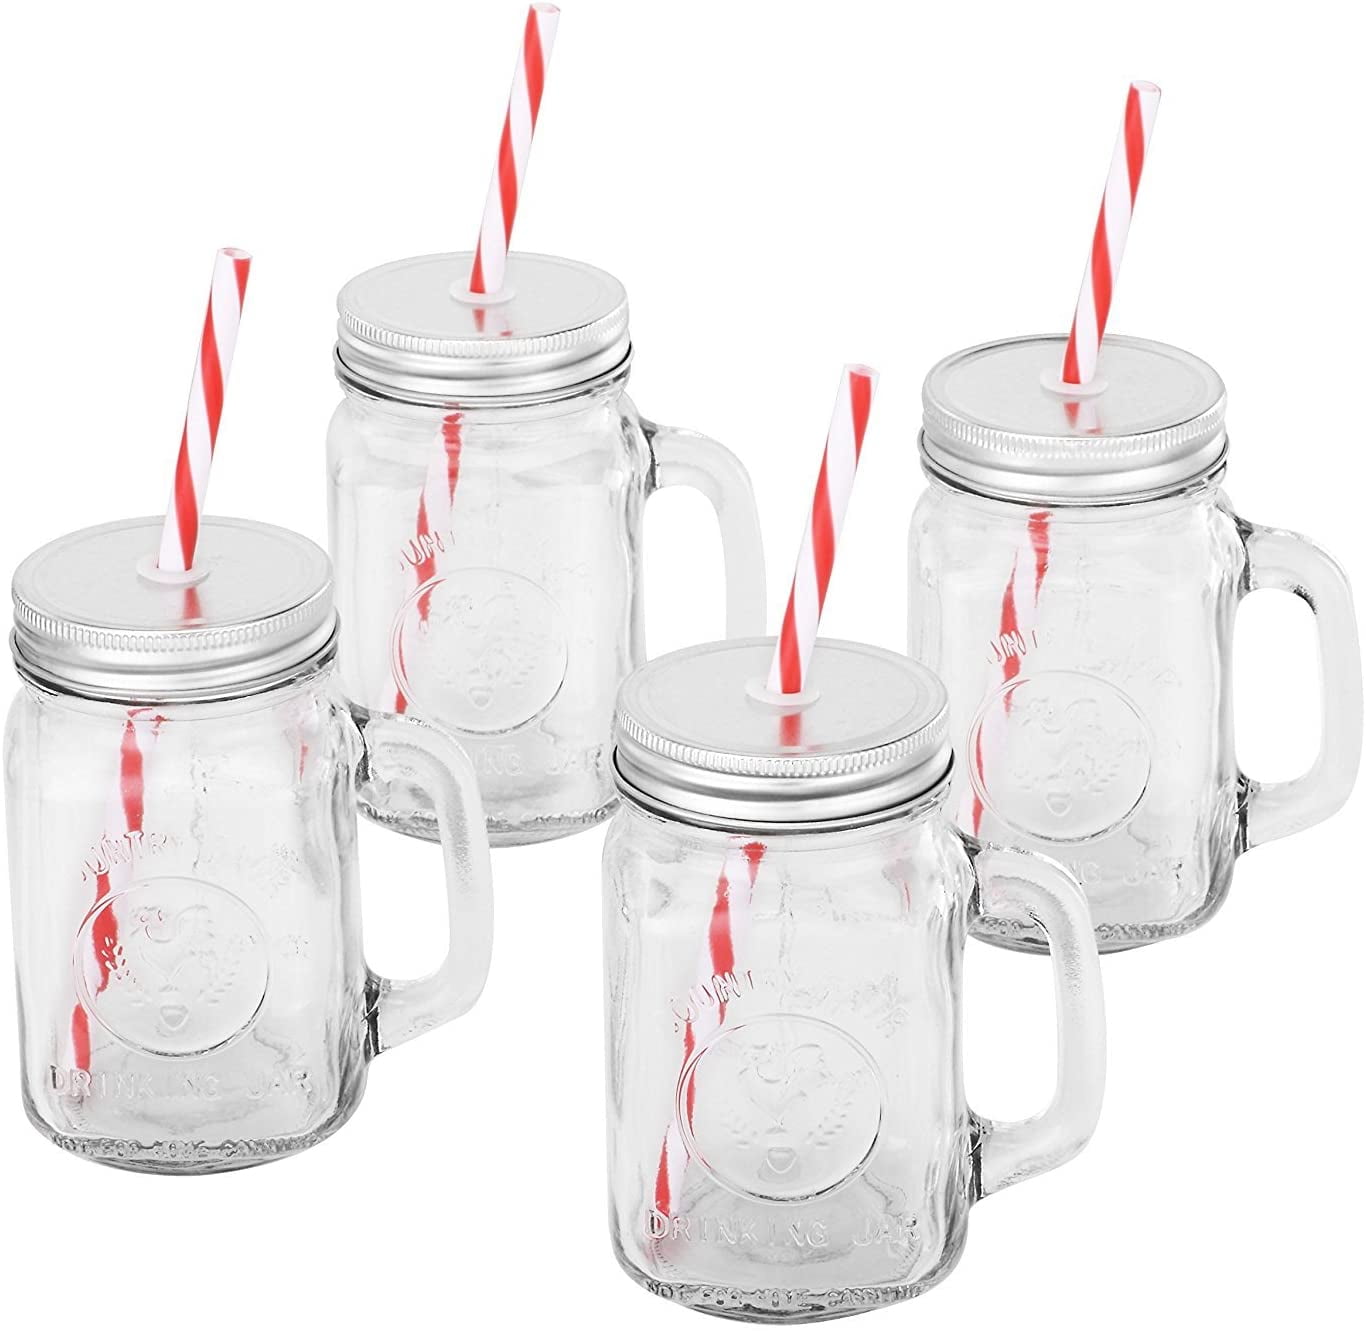 12 oz Mason Glass Jars with Silver Lids by Premium Vials 12 pcs 